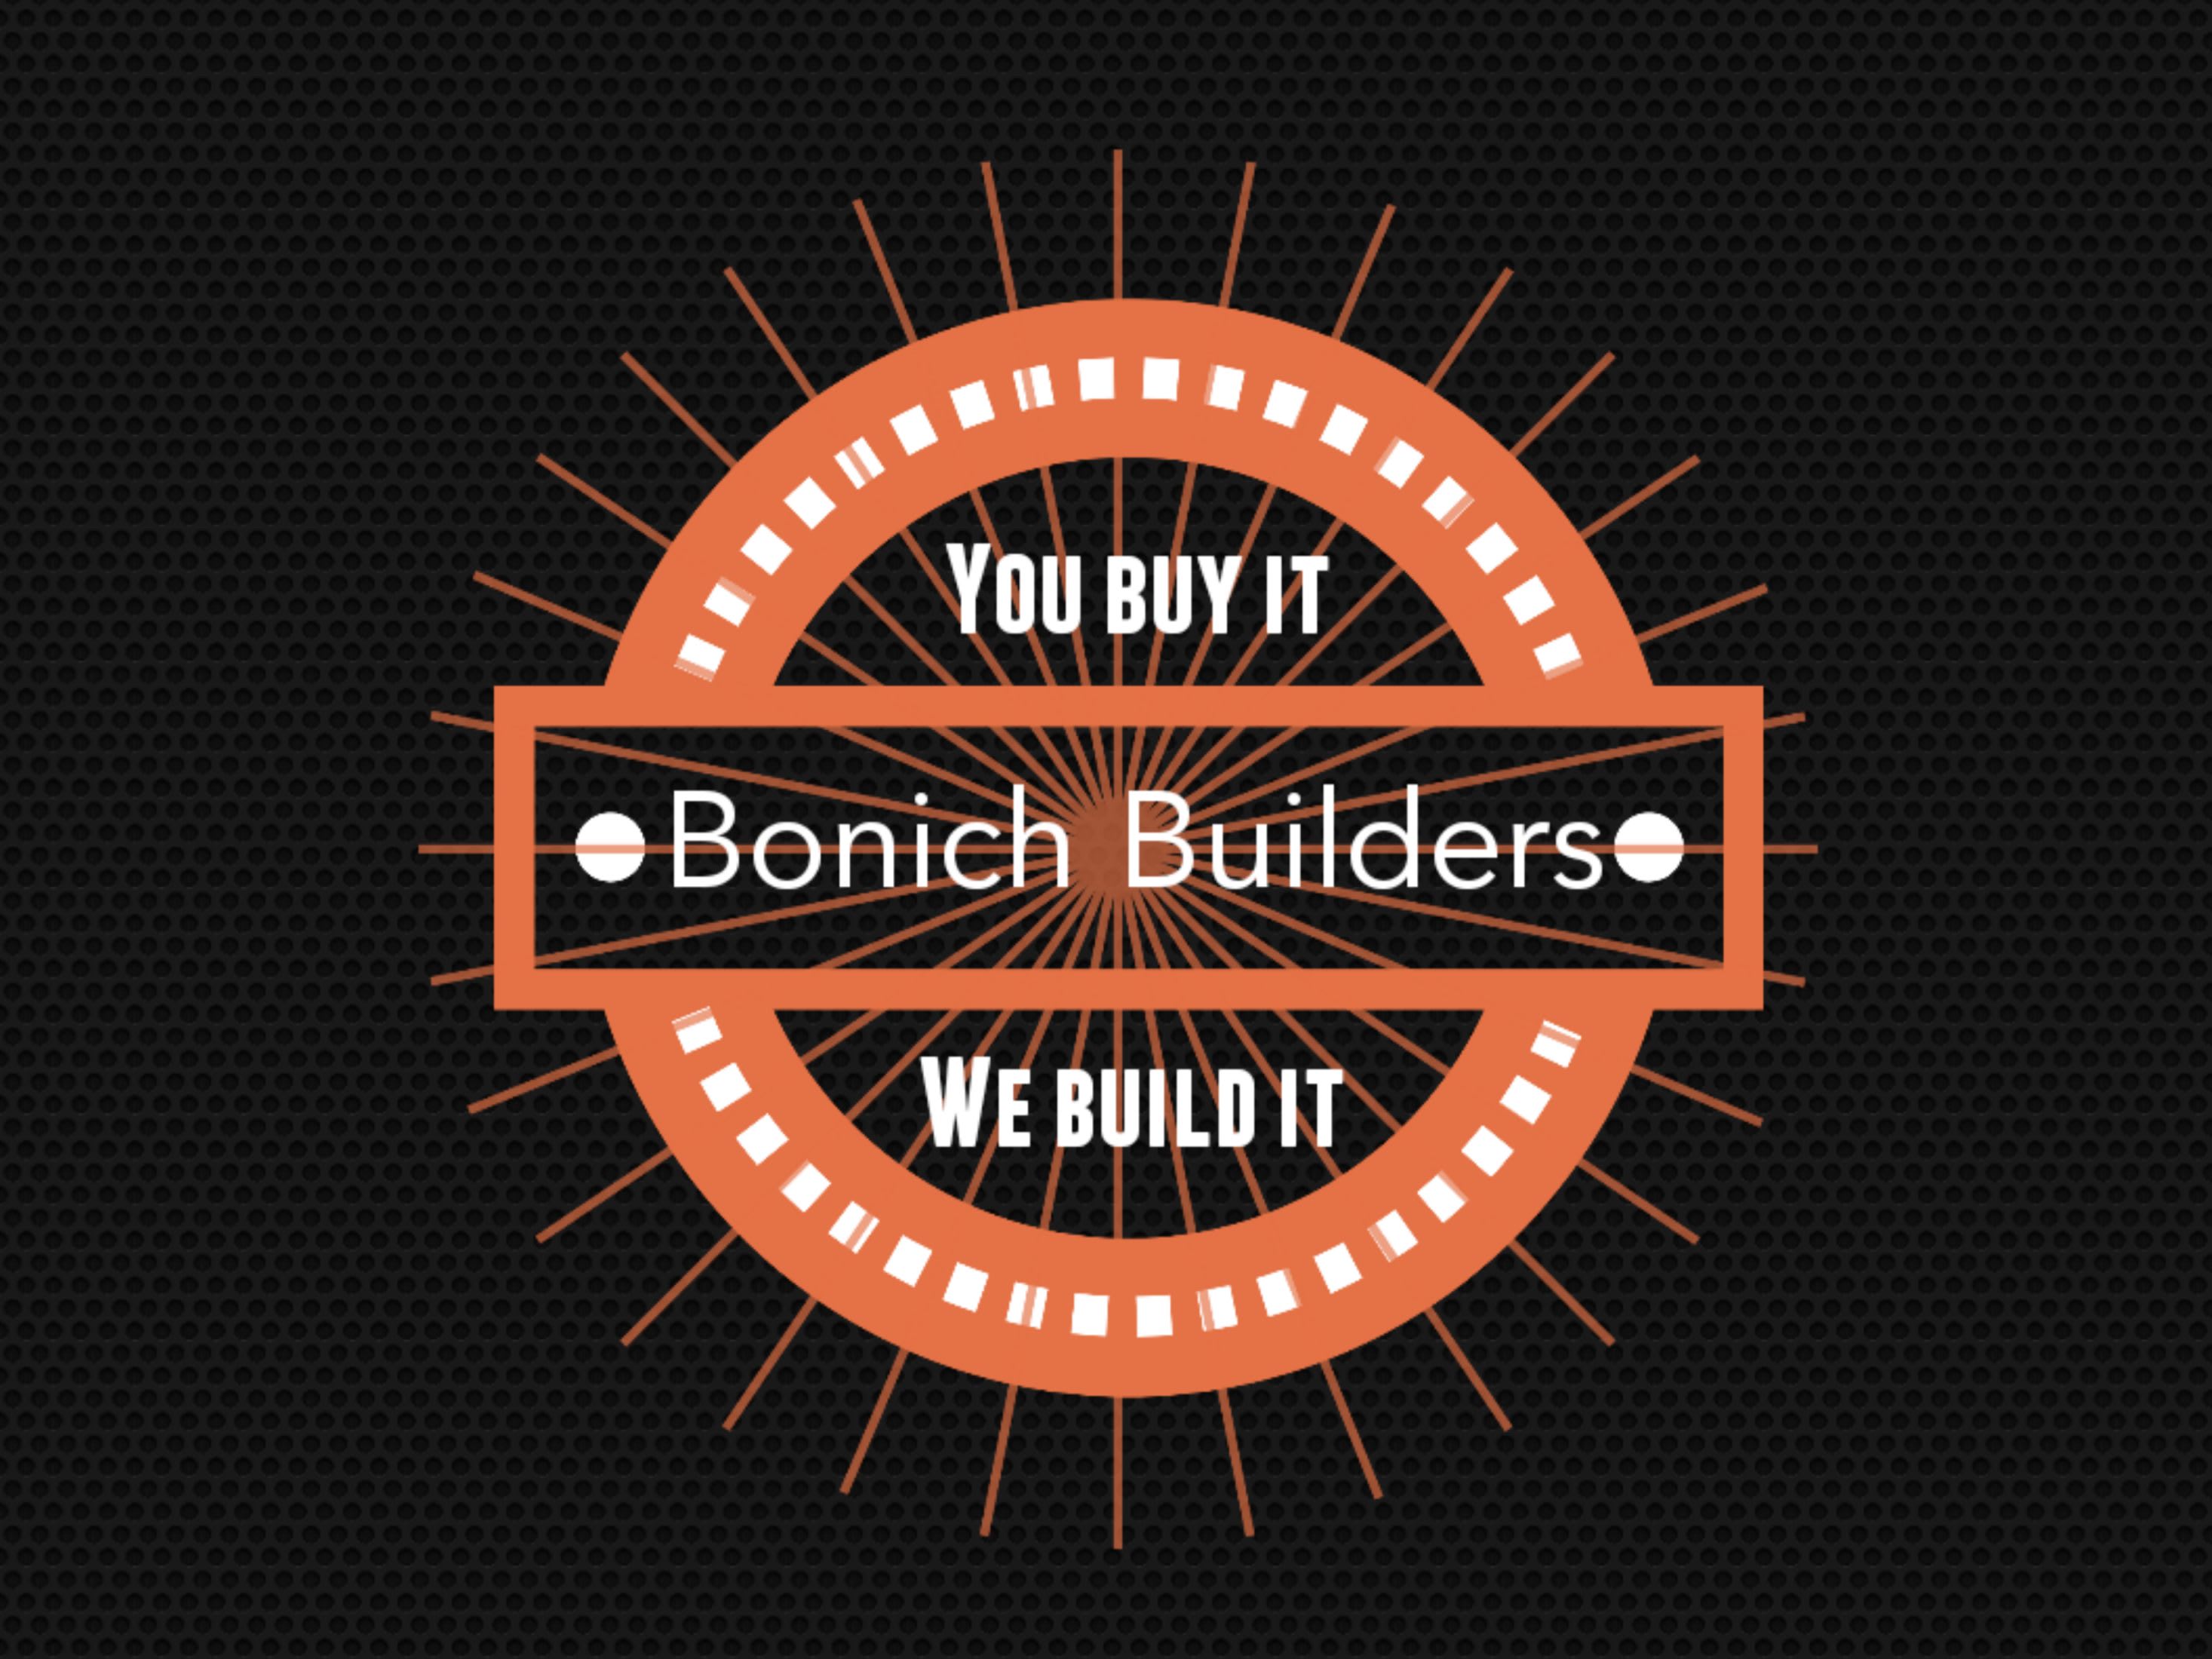 Bonich Builders